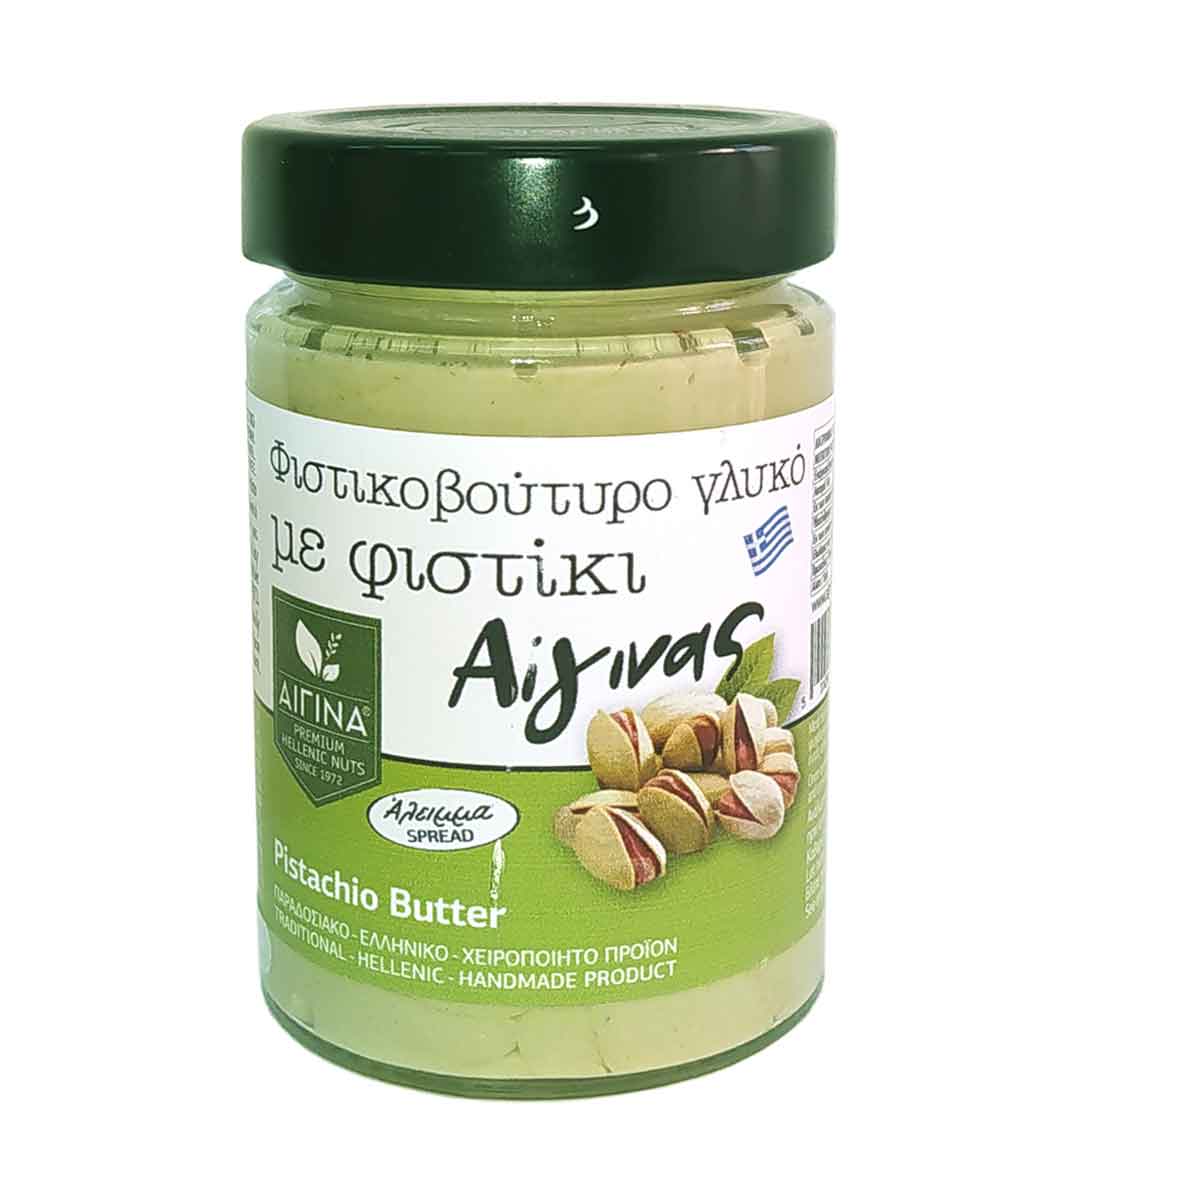 Pistachio Butter from Aegina island, 180gr, "Aegina Dried Nuts", no preservatives